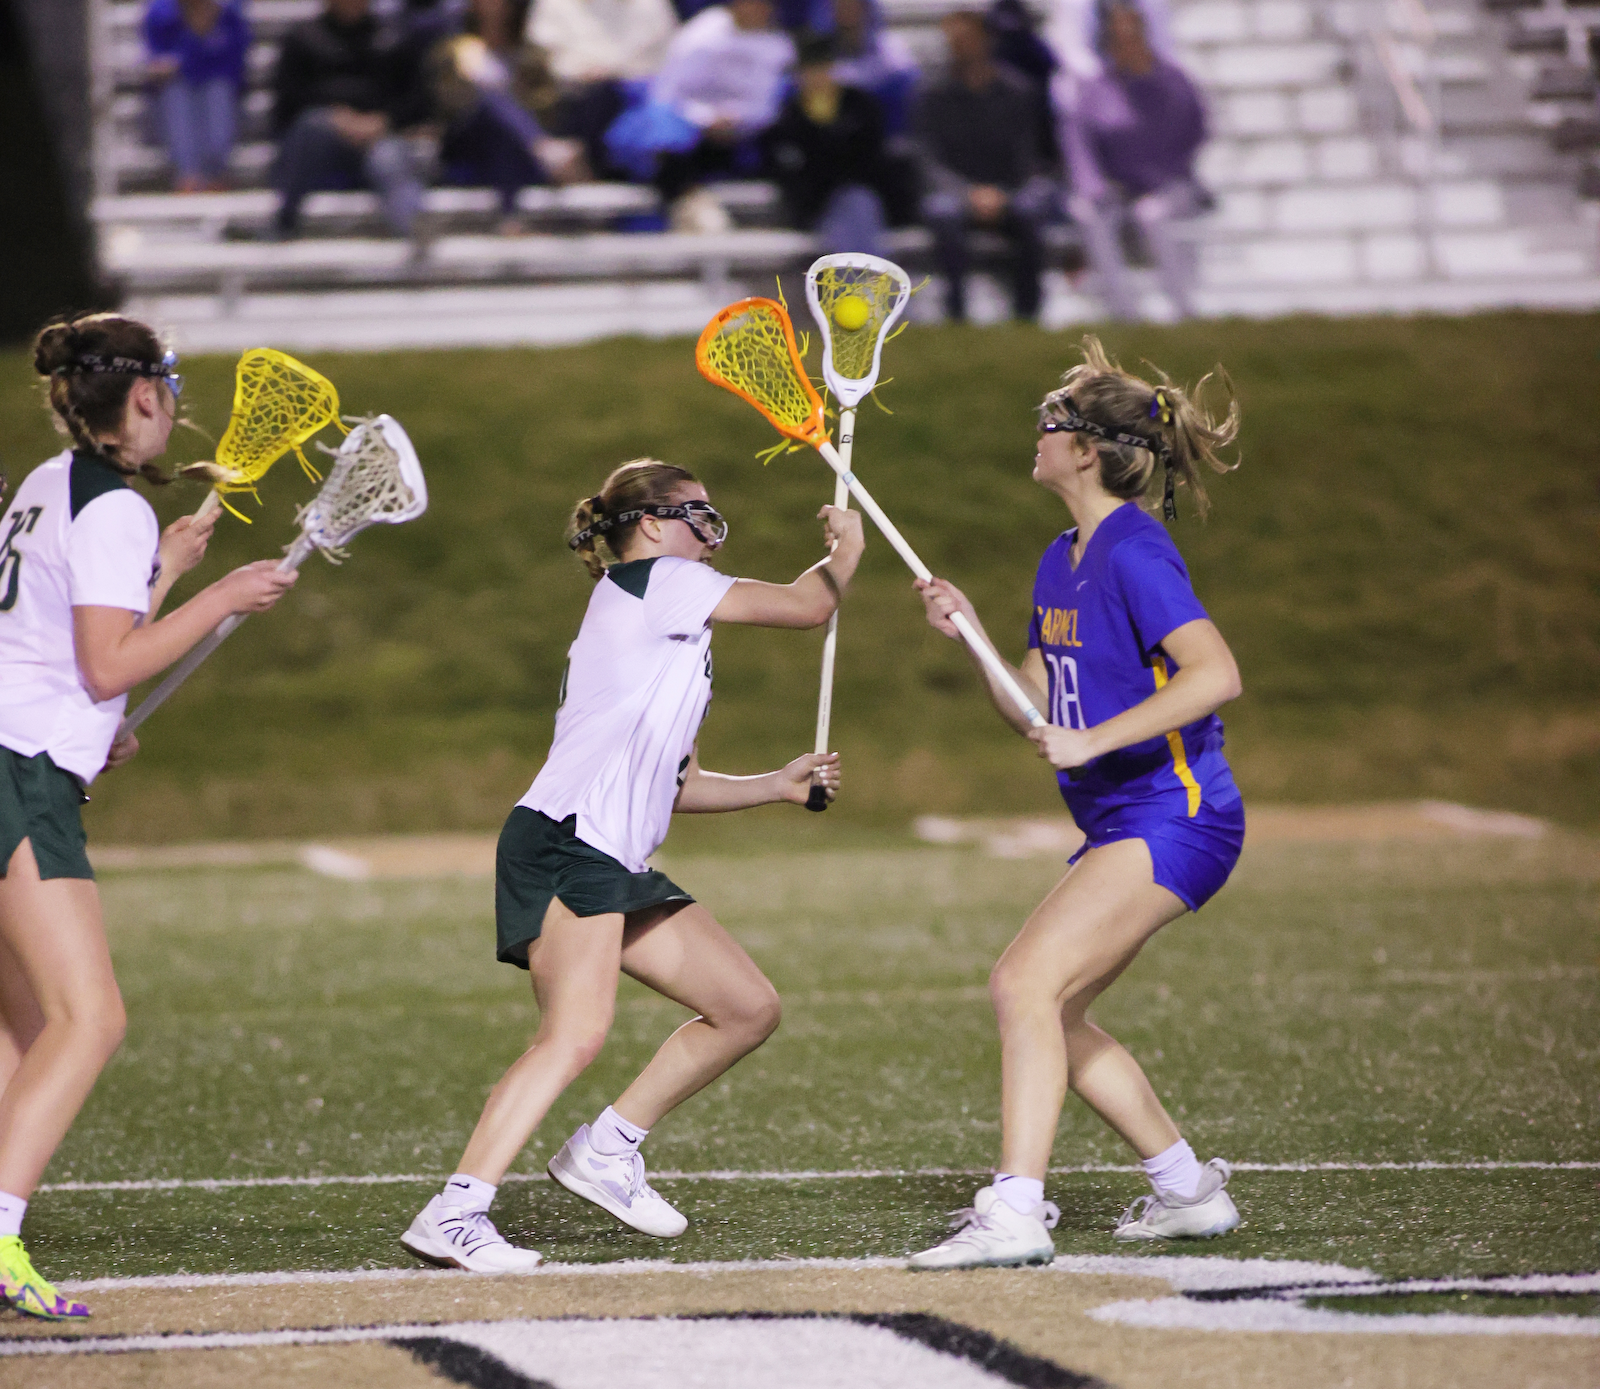 Girls Lacrosse vs Carmel (RMH) gallery cover photo